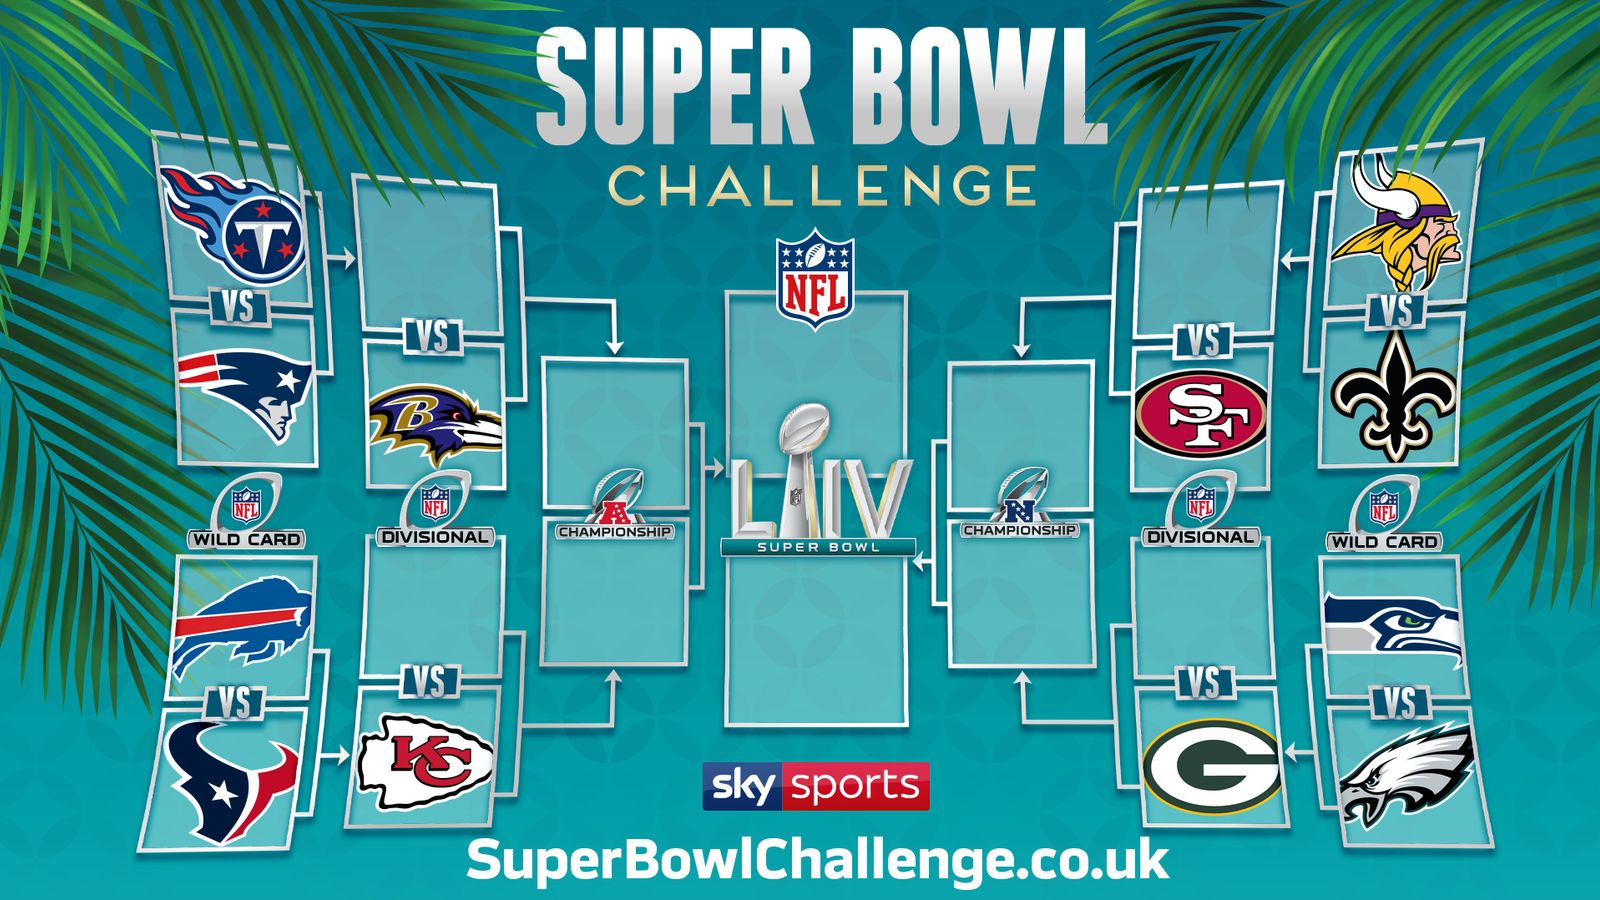 Super Bowl Challenge: Register and pick your bracket for the NFL playoffs, NFL News